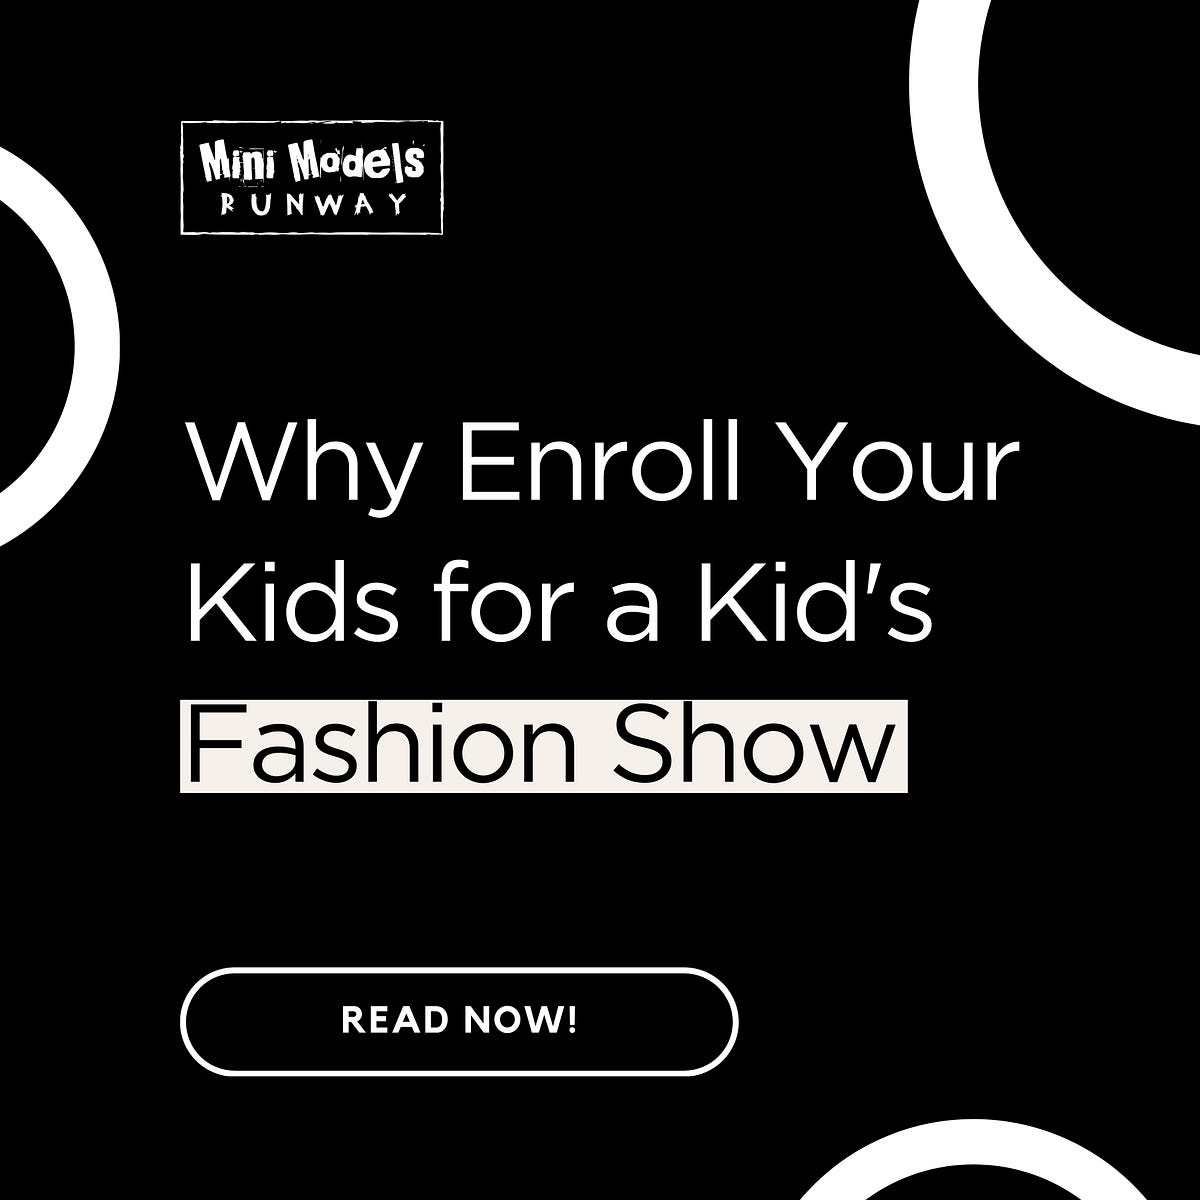 WhyEnroll Your Kids for a Kid's Fashion Show - Mini Models Runway | Medium